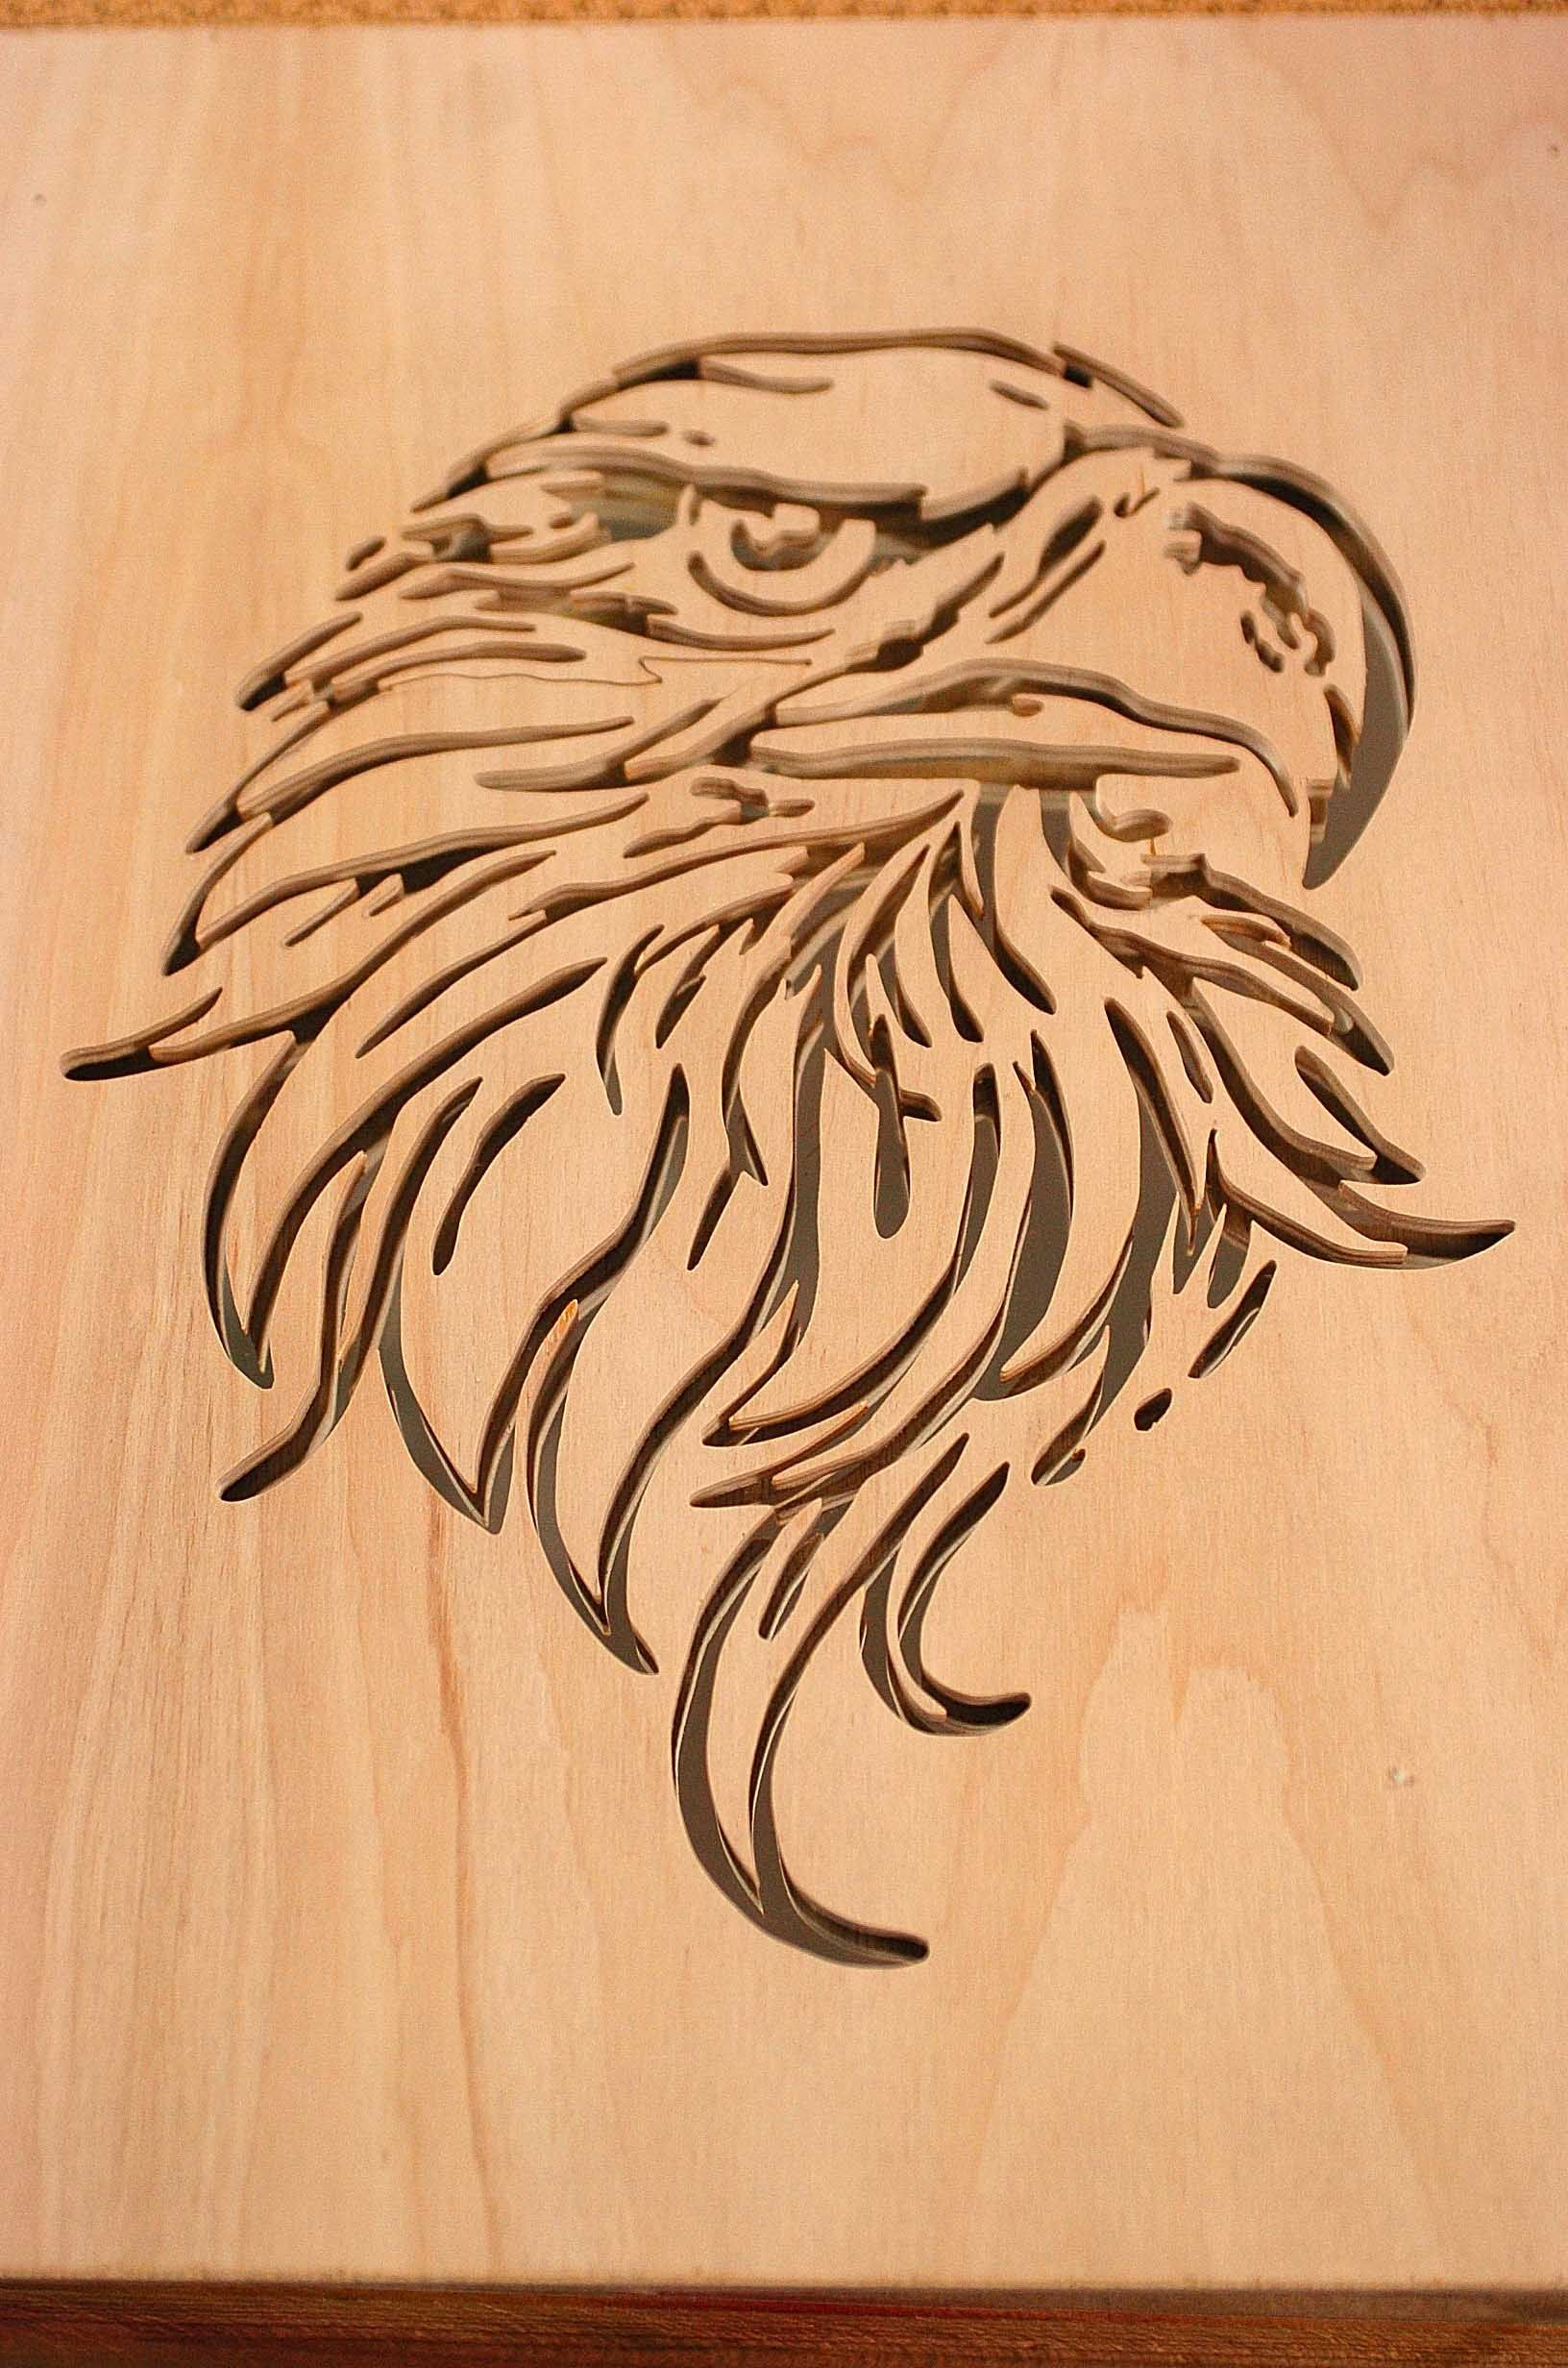 Pin By Virinchi On Woodworking I Made Wood Burning Patterns Wood 